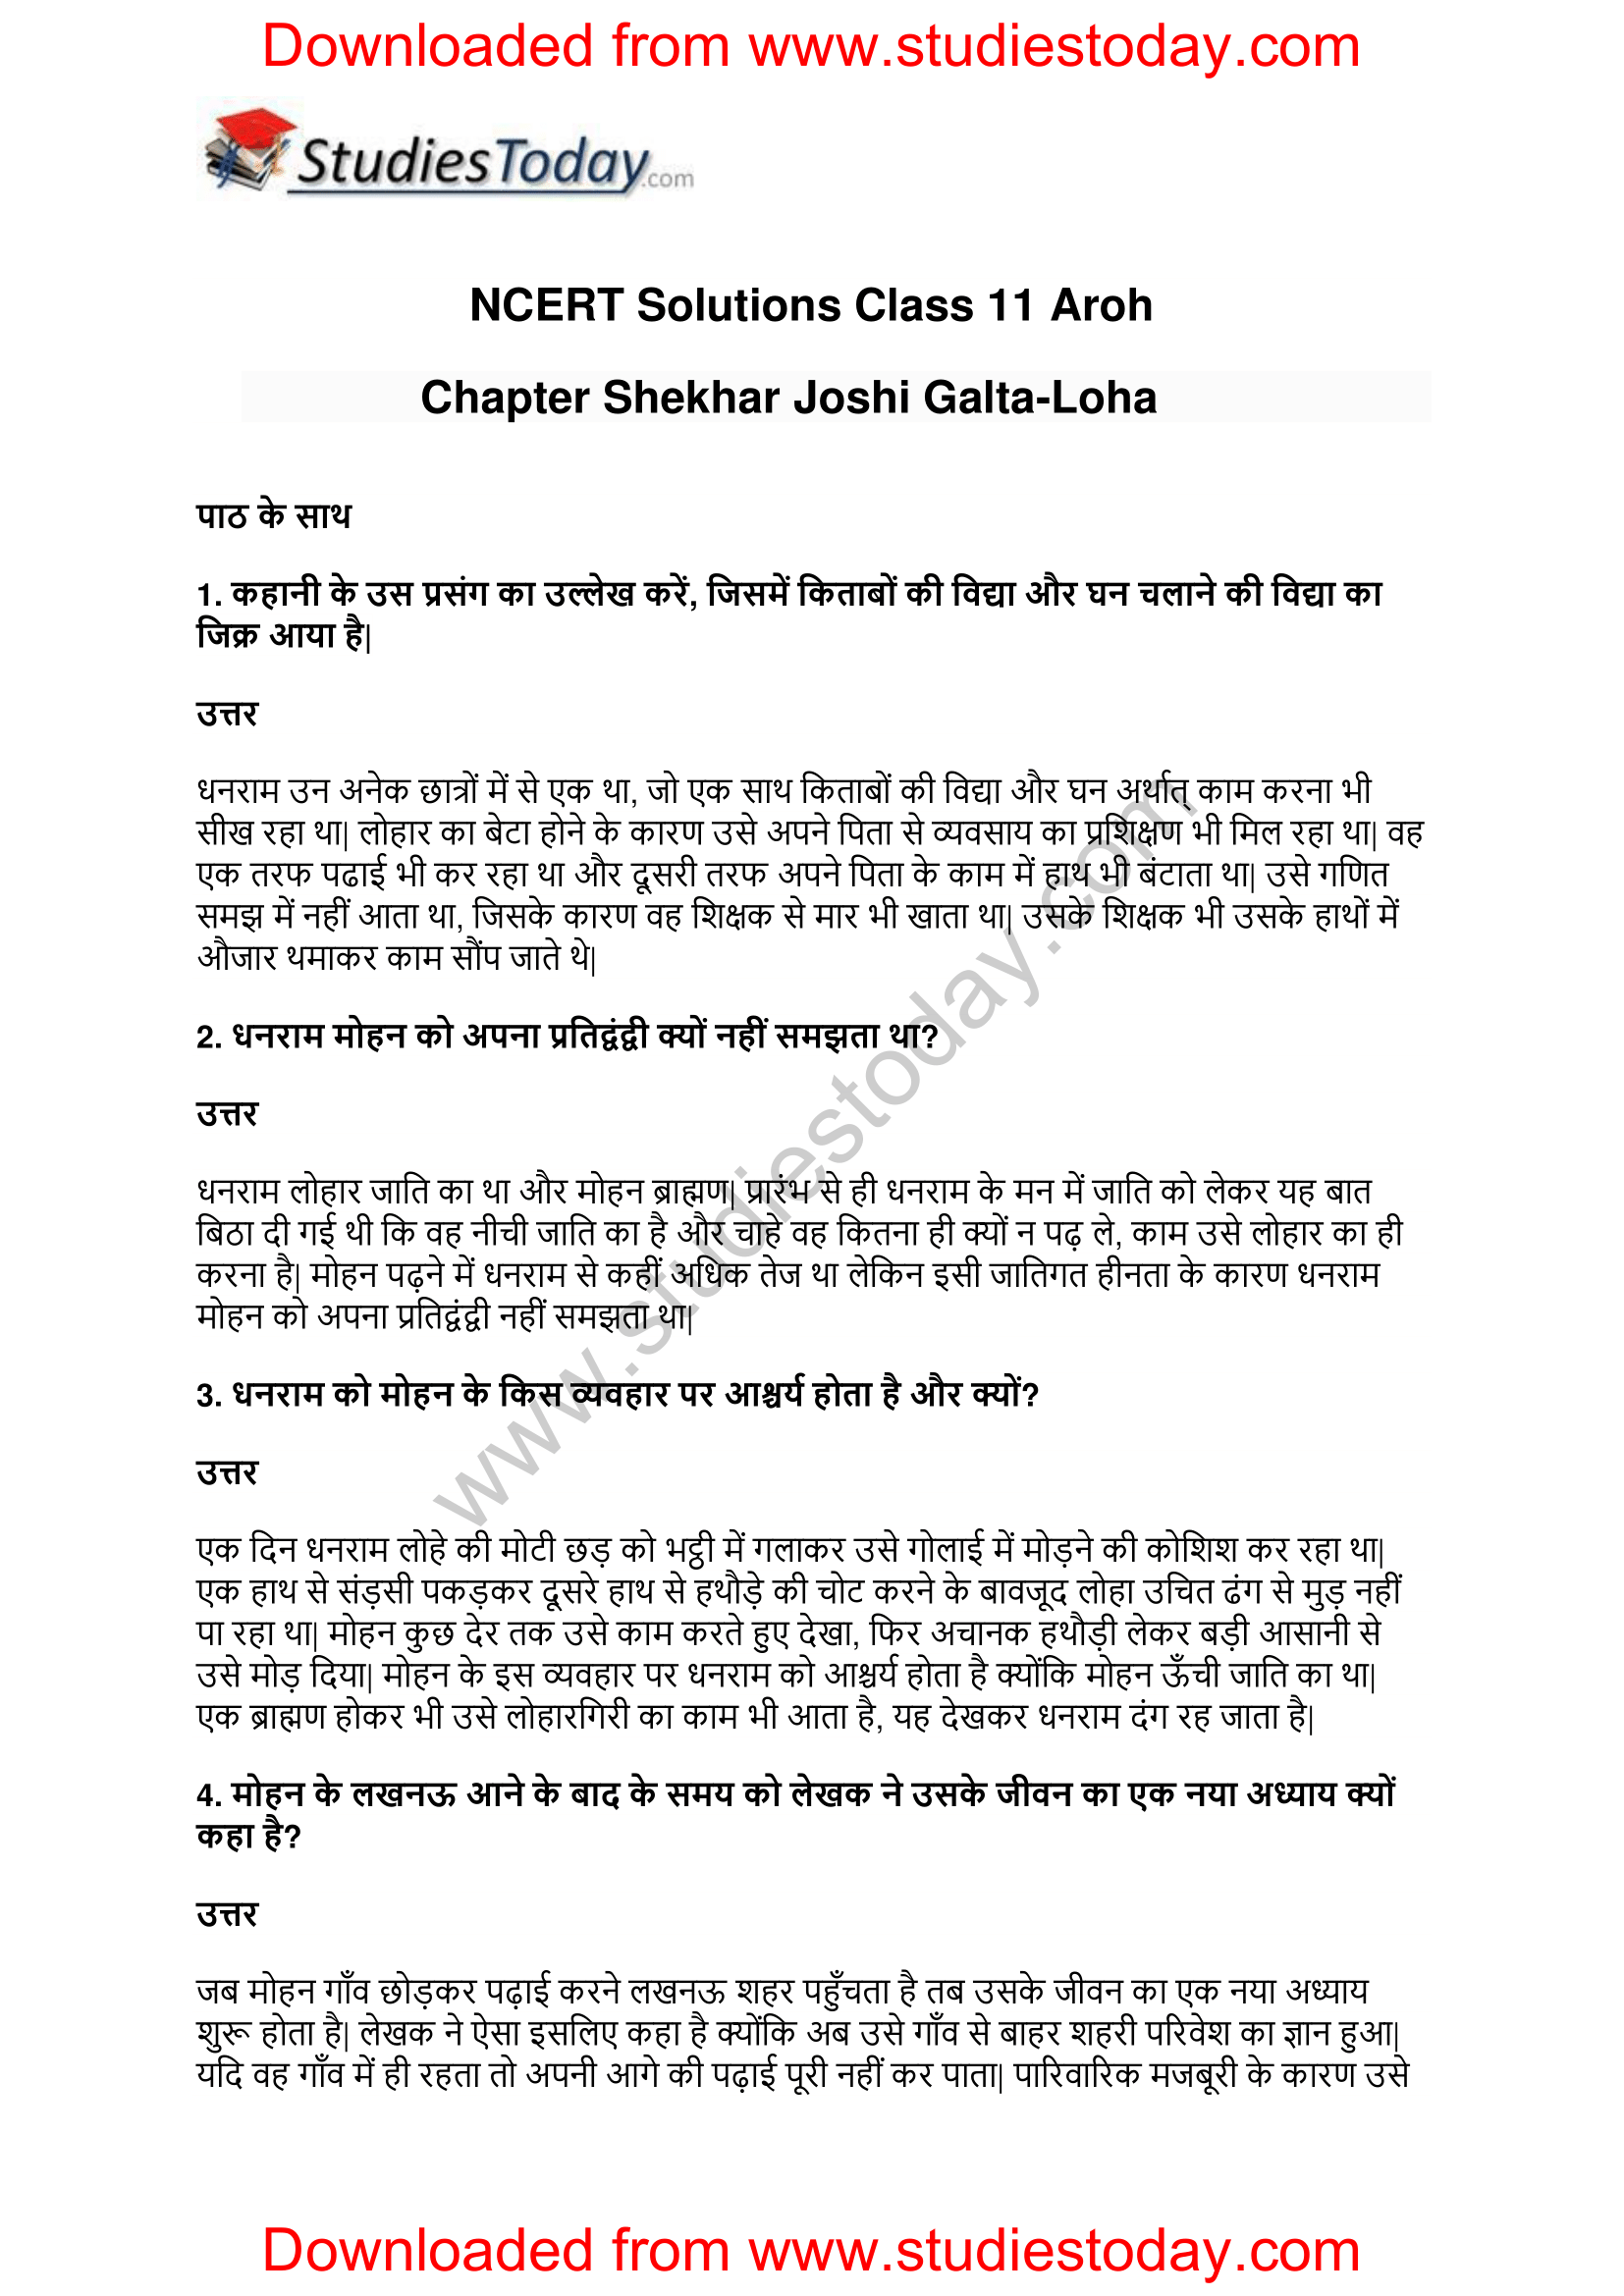 NCERT-Solutions-Class-11-Hindi-Aroh-Shekhar-Joshi-1